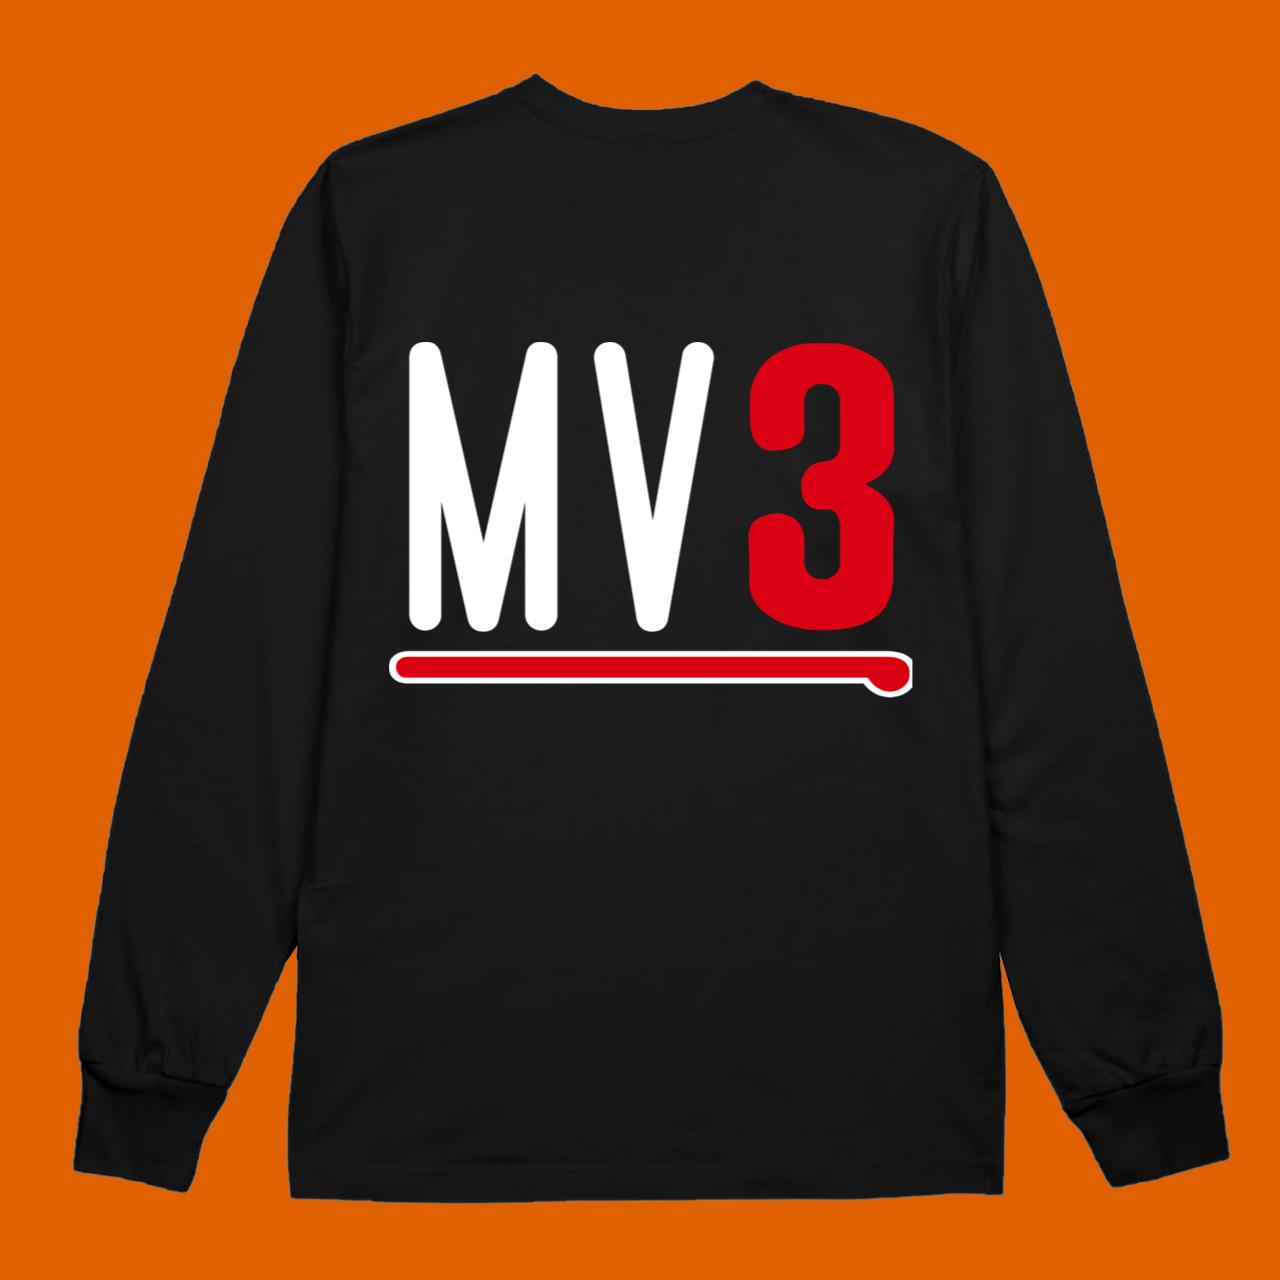 Mv3 Bryce Harper Phillies Baseball Essential T-Shirt